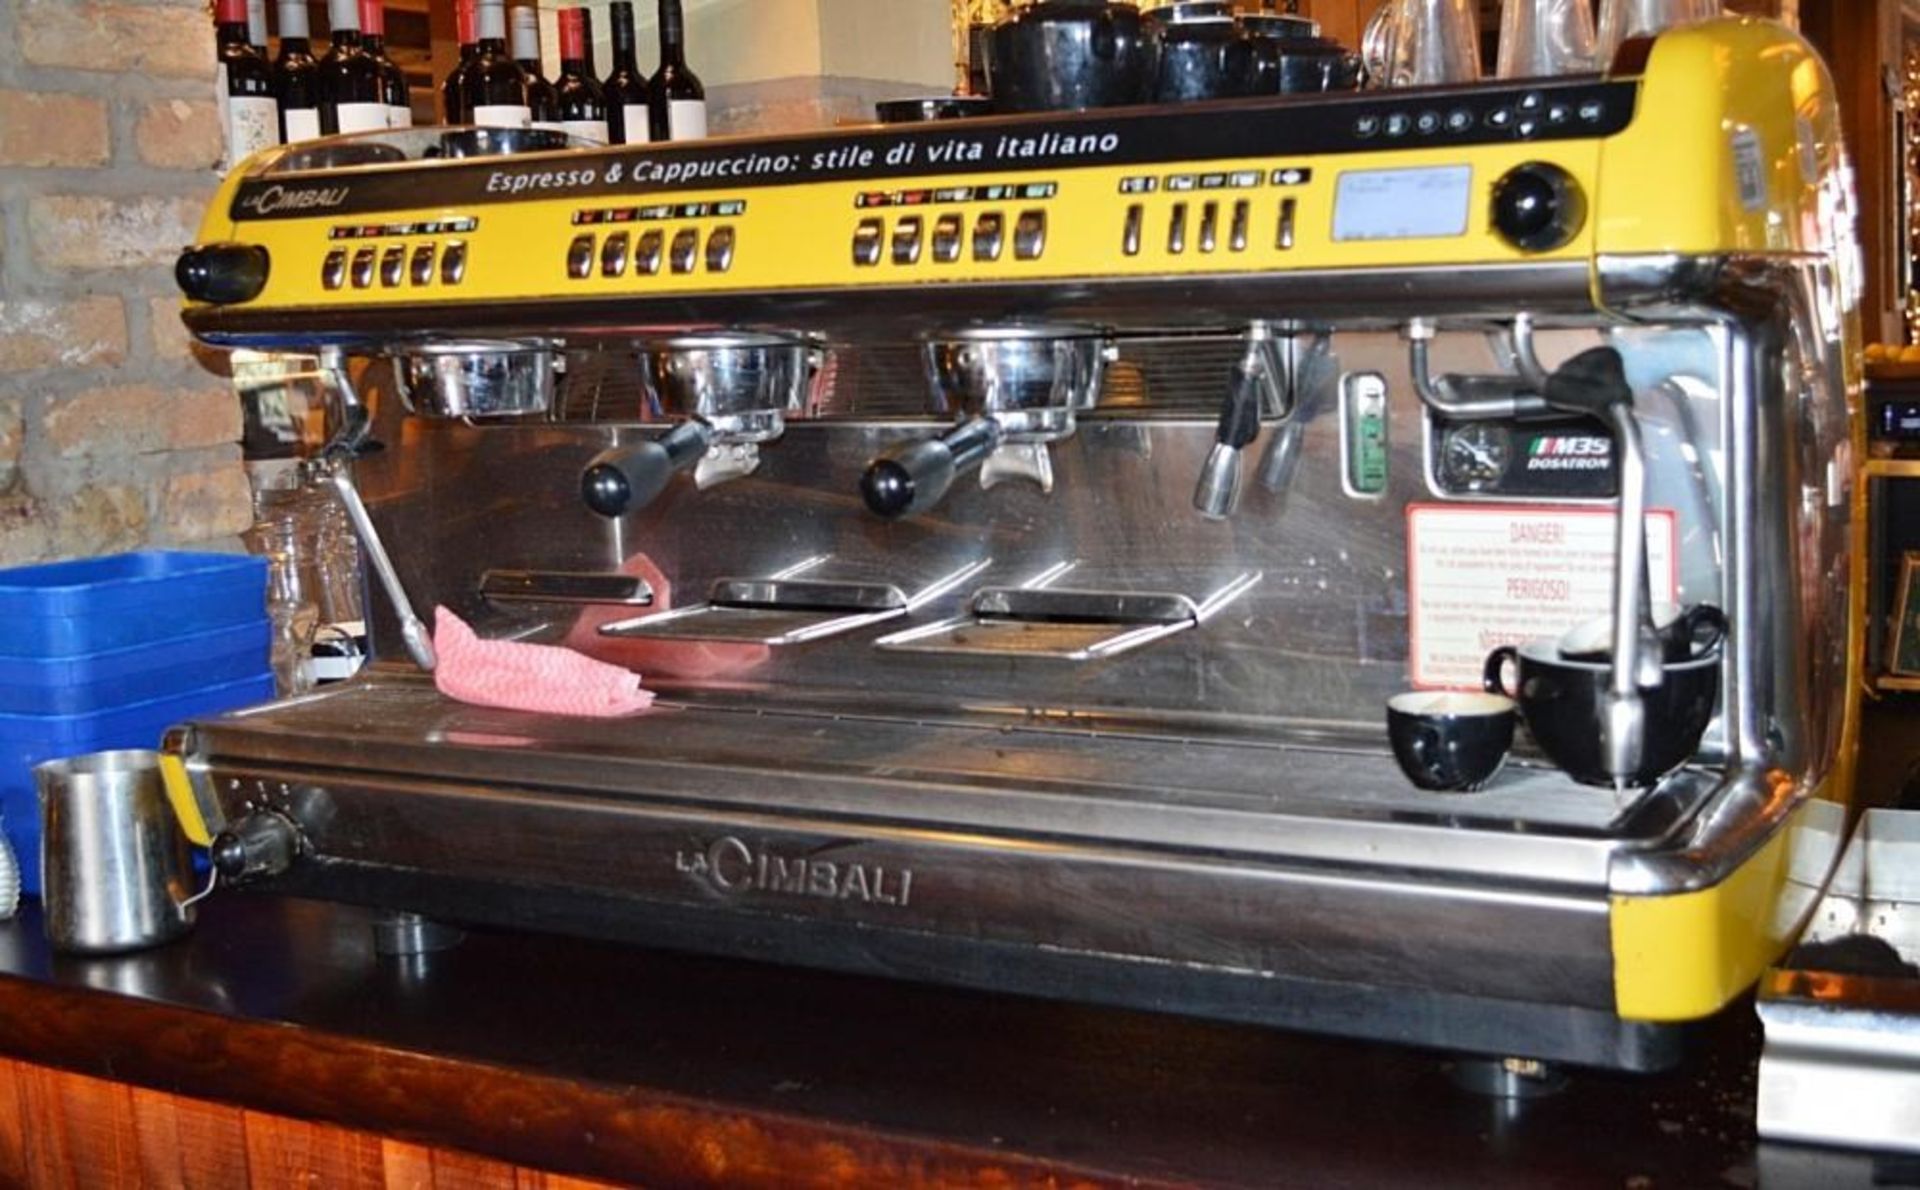 1 x La Cimbalie Espresso 3 Group Coffee Machine in Yellow - Model M39 Dosatron - Approx Dimensions - Image 2 of 6